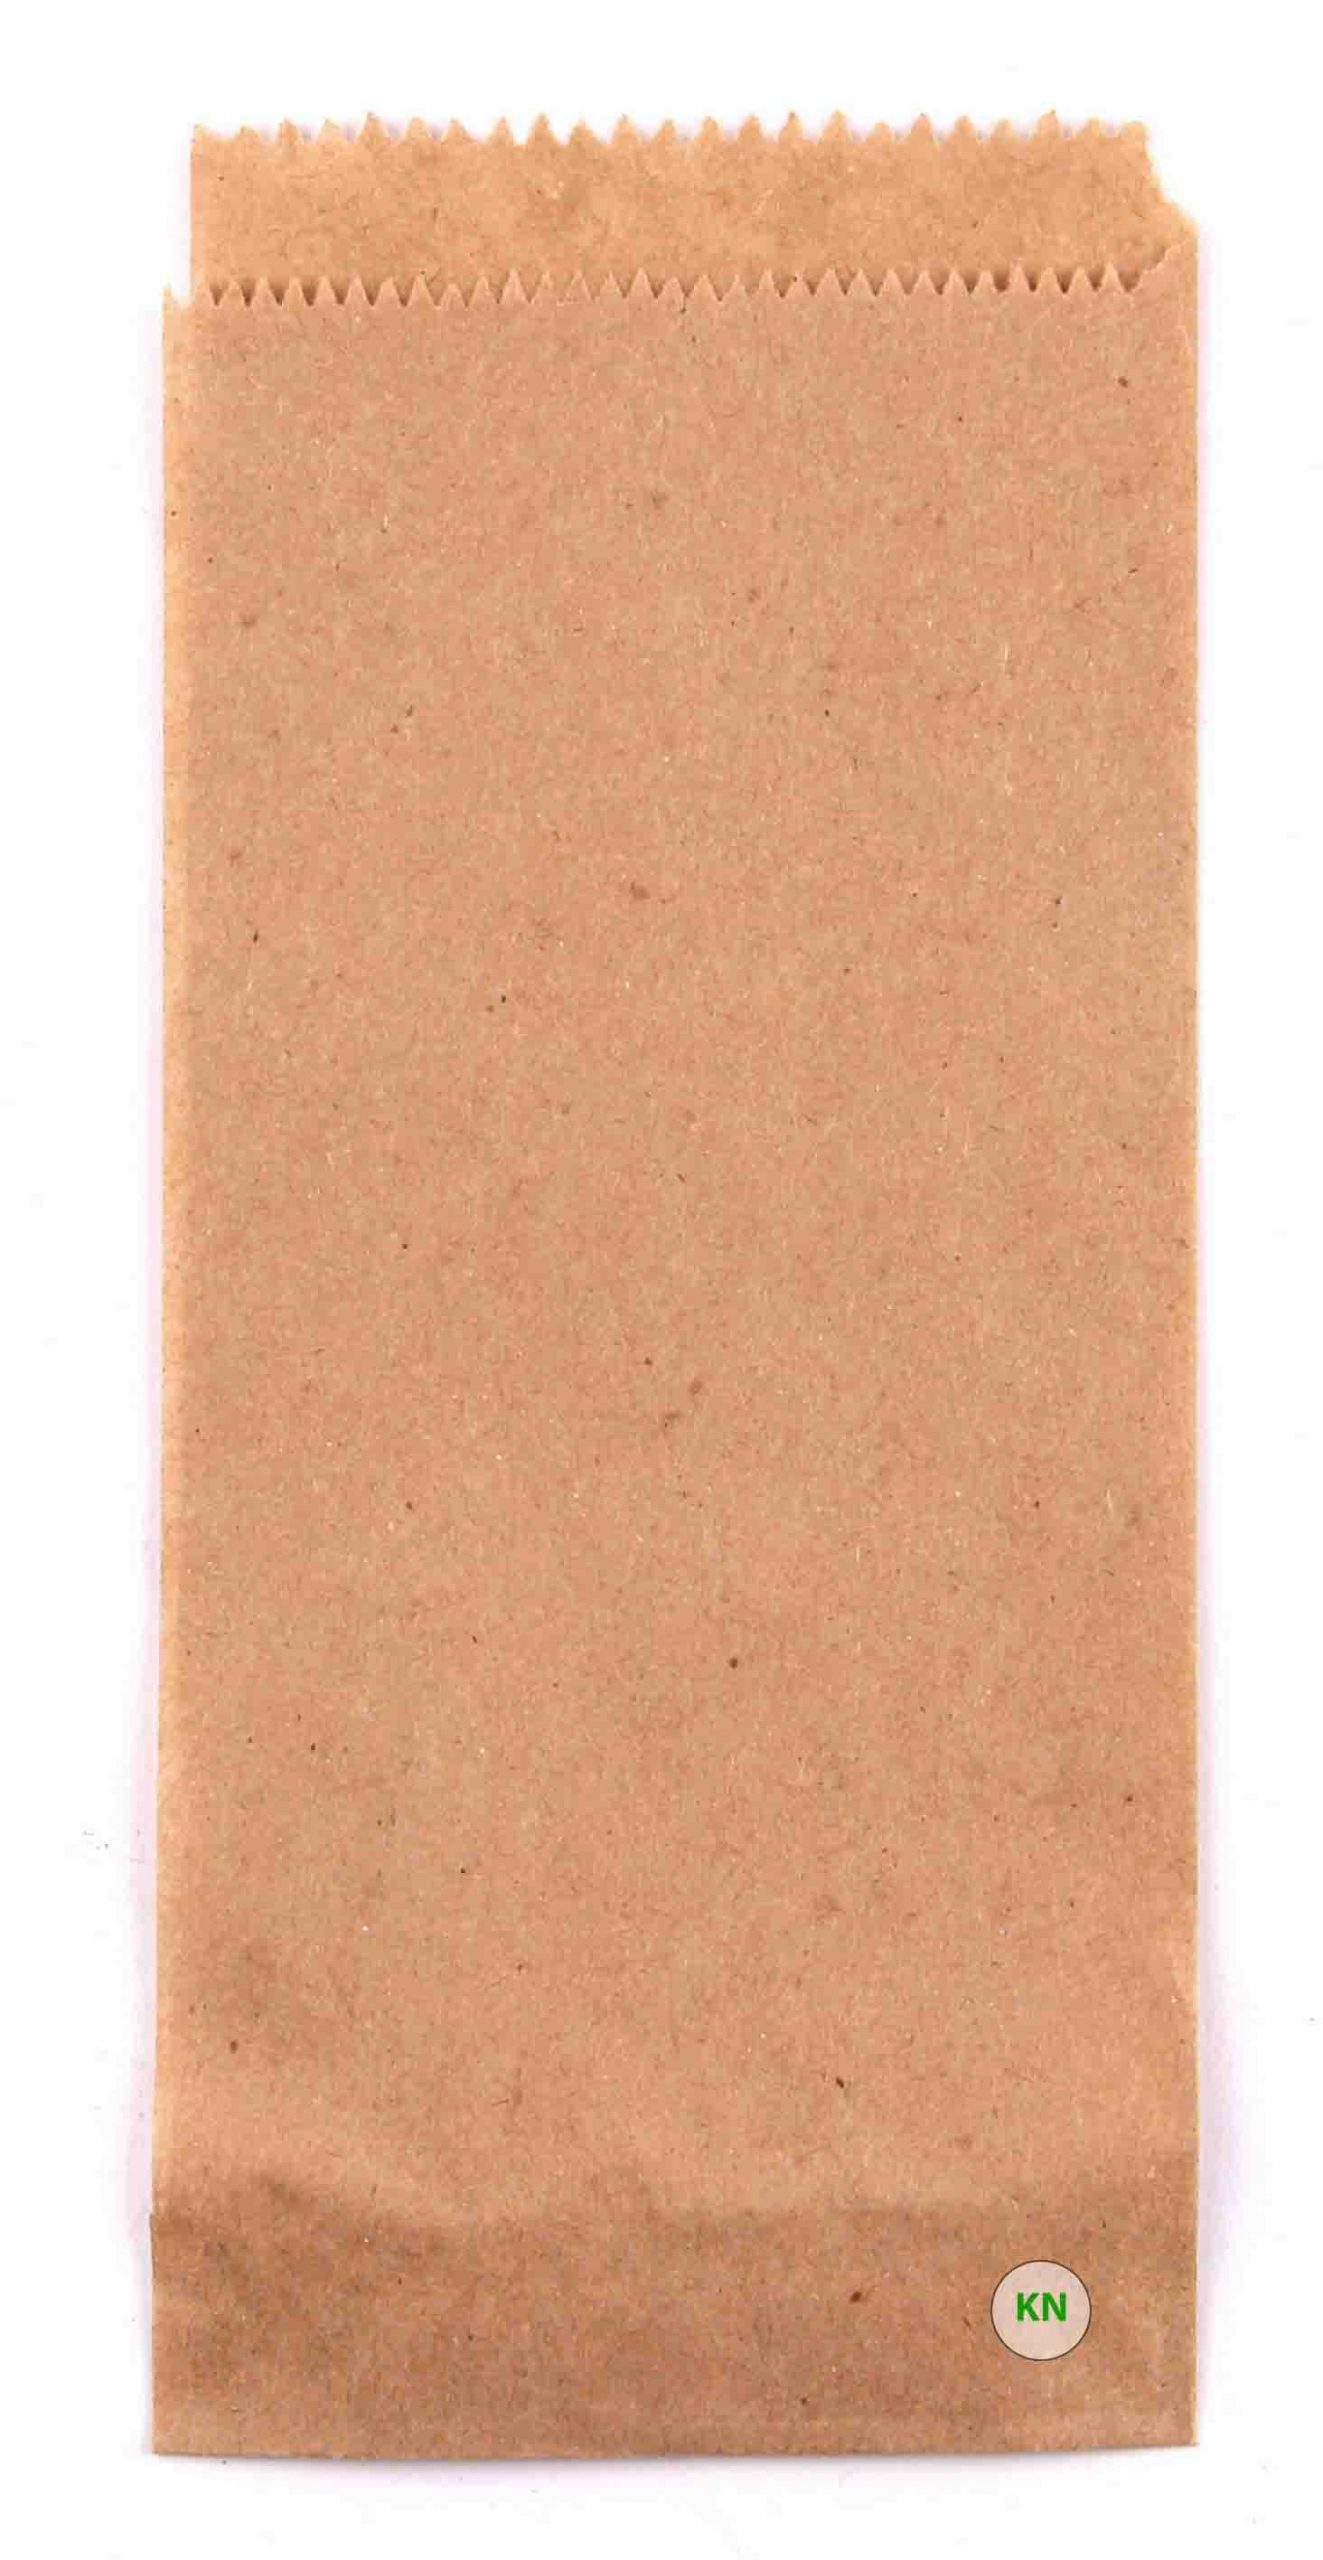 Пакет паперовий коричневий для французького хот-догу, 200 х 70 мм